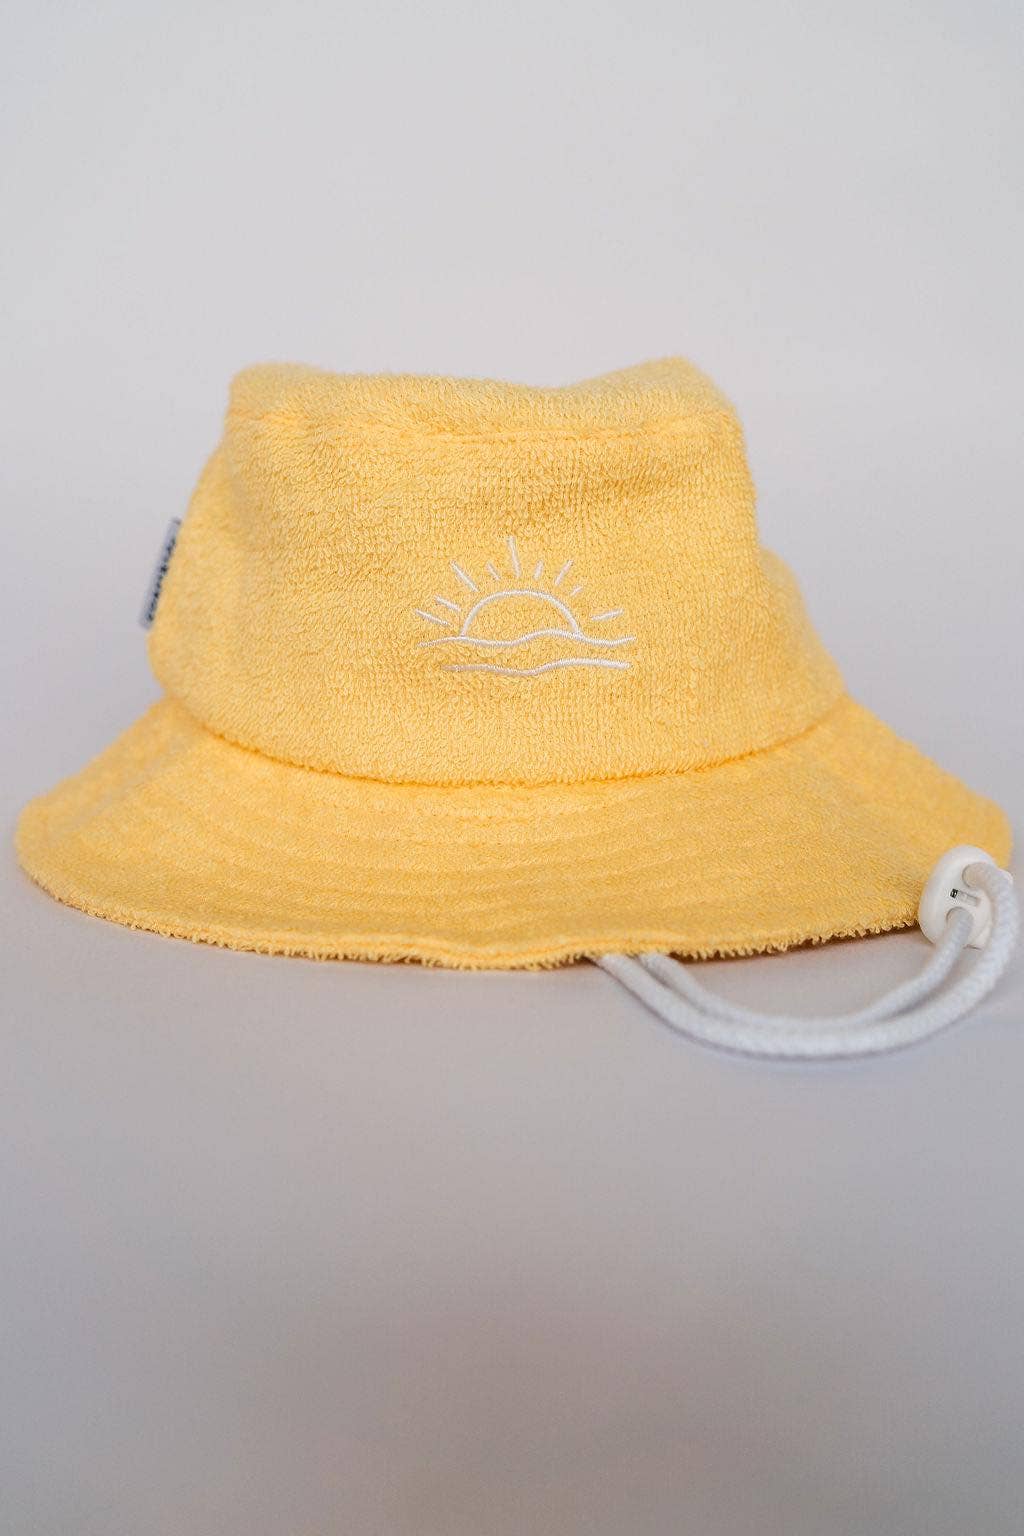 Terrigal Beach Hat - terry towelling bucket hat